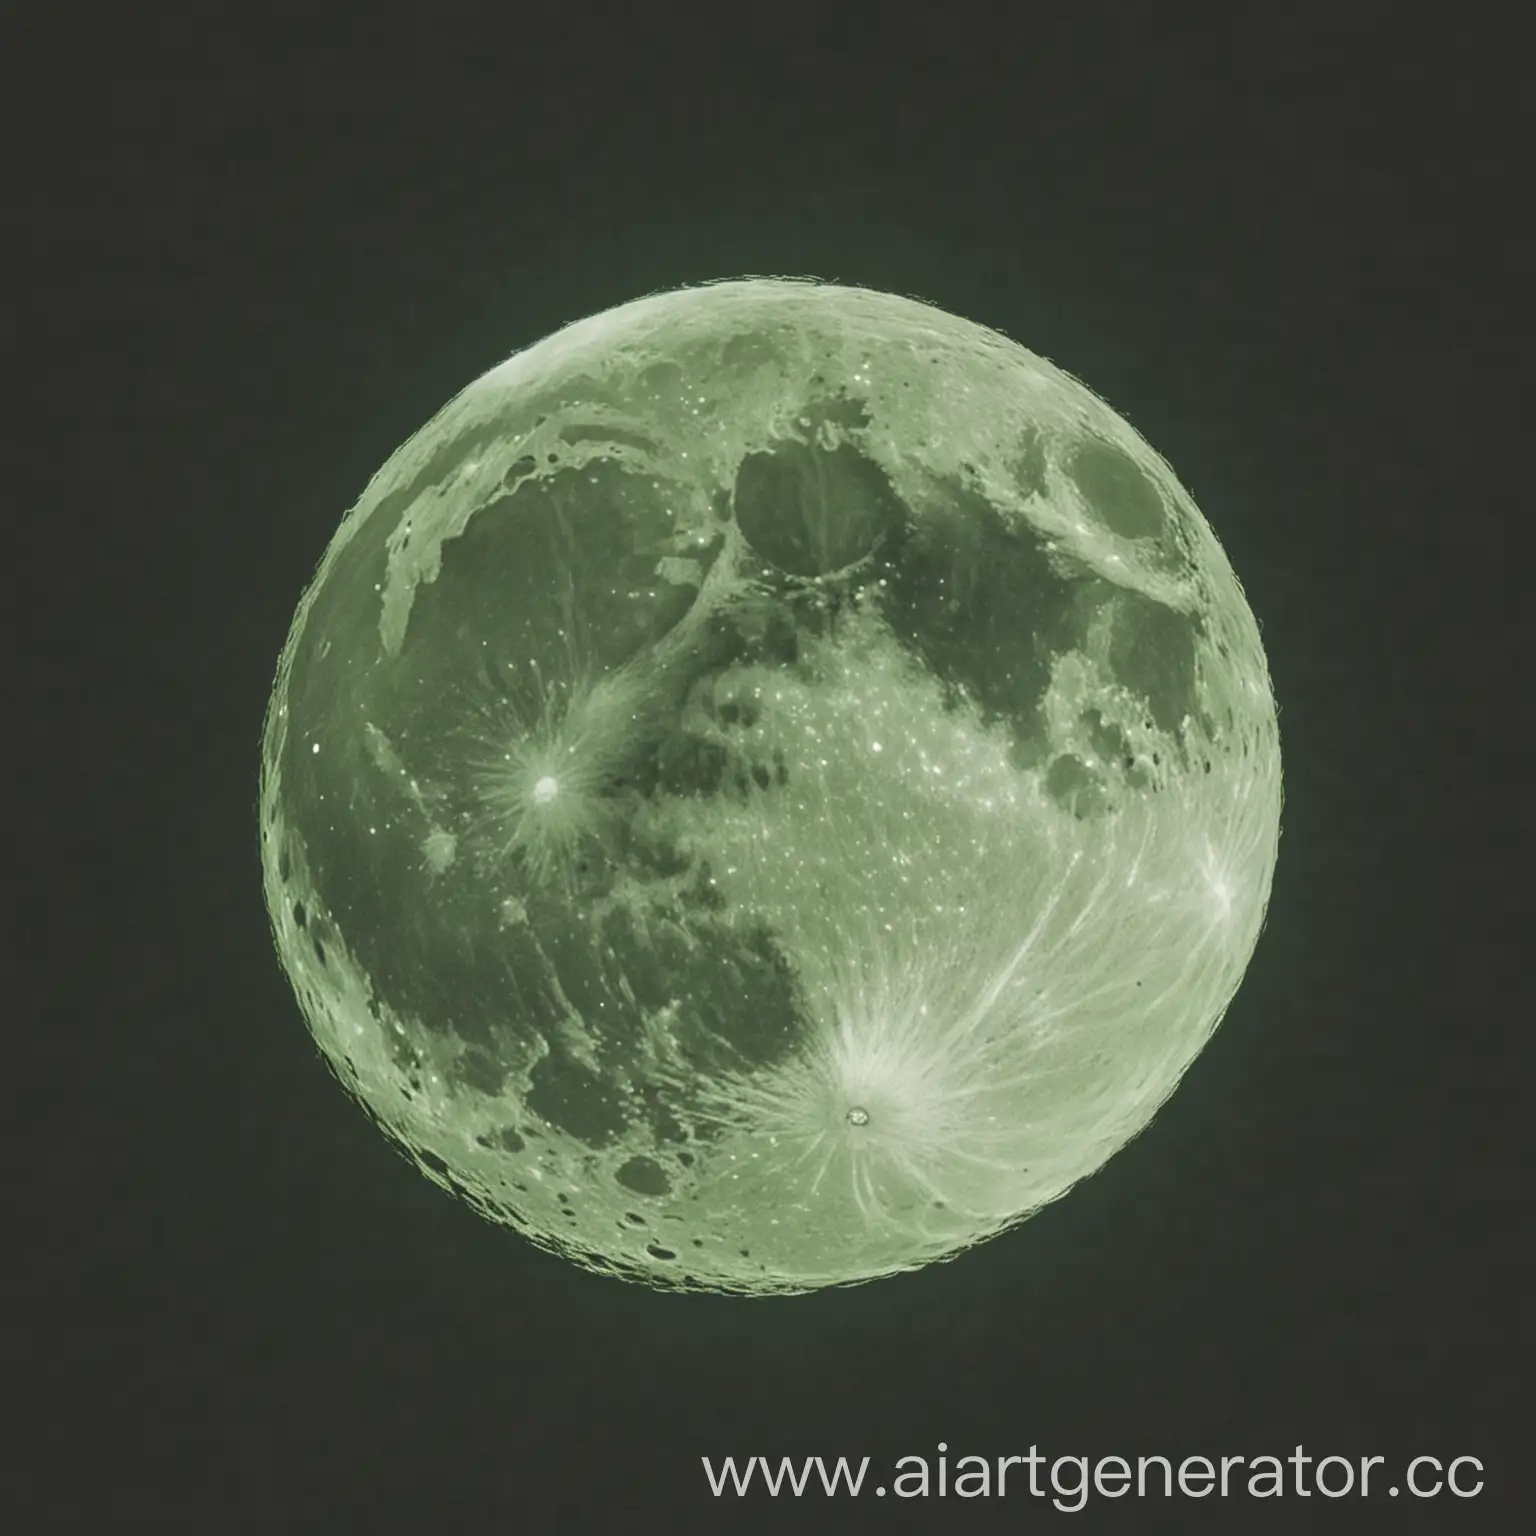 Mystical-Green-Moon-Illuminating-a-Surreal-Landscape